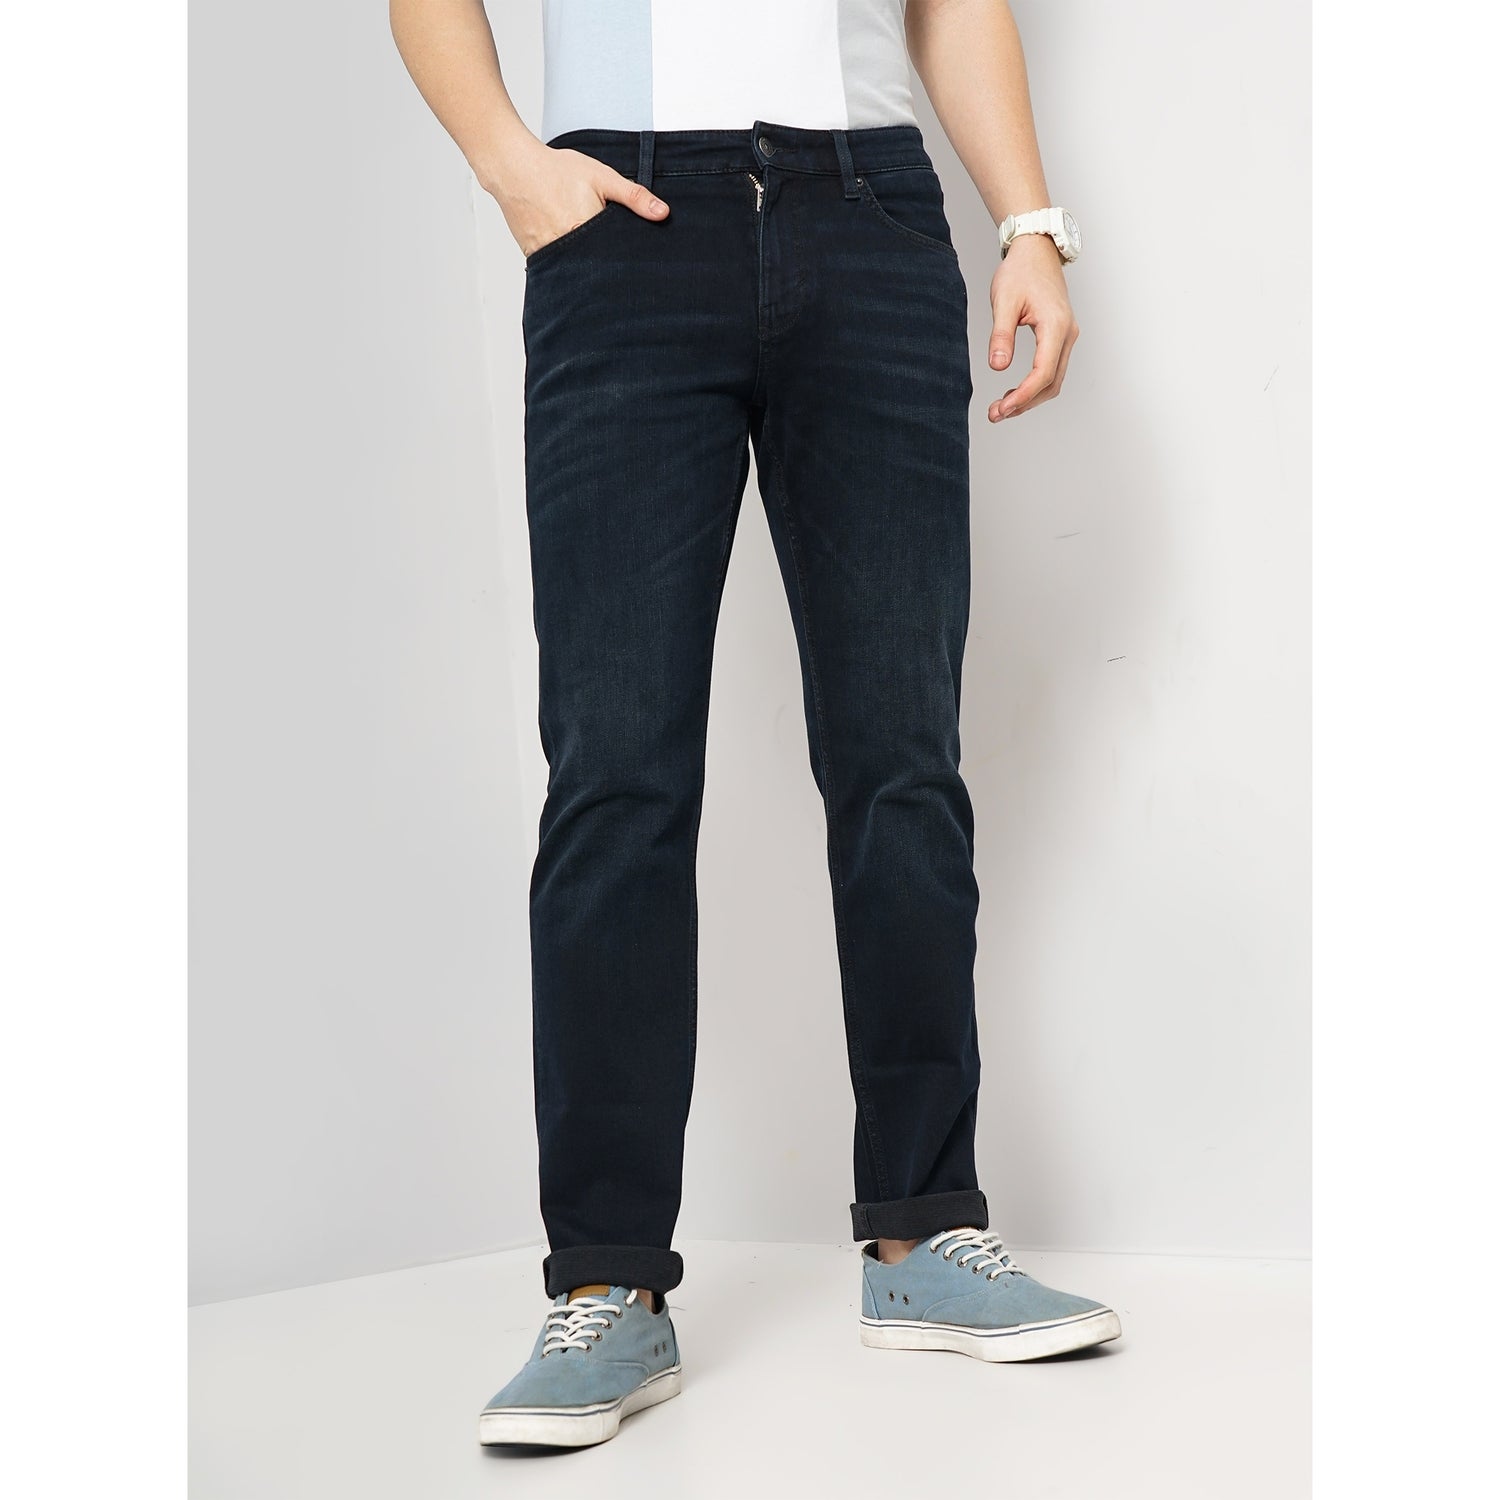 Men Black Solid Straight Fit Cotton Twill Denim Jeans (STRAIGHT3L)